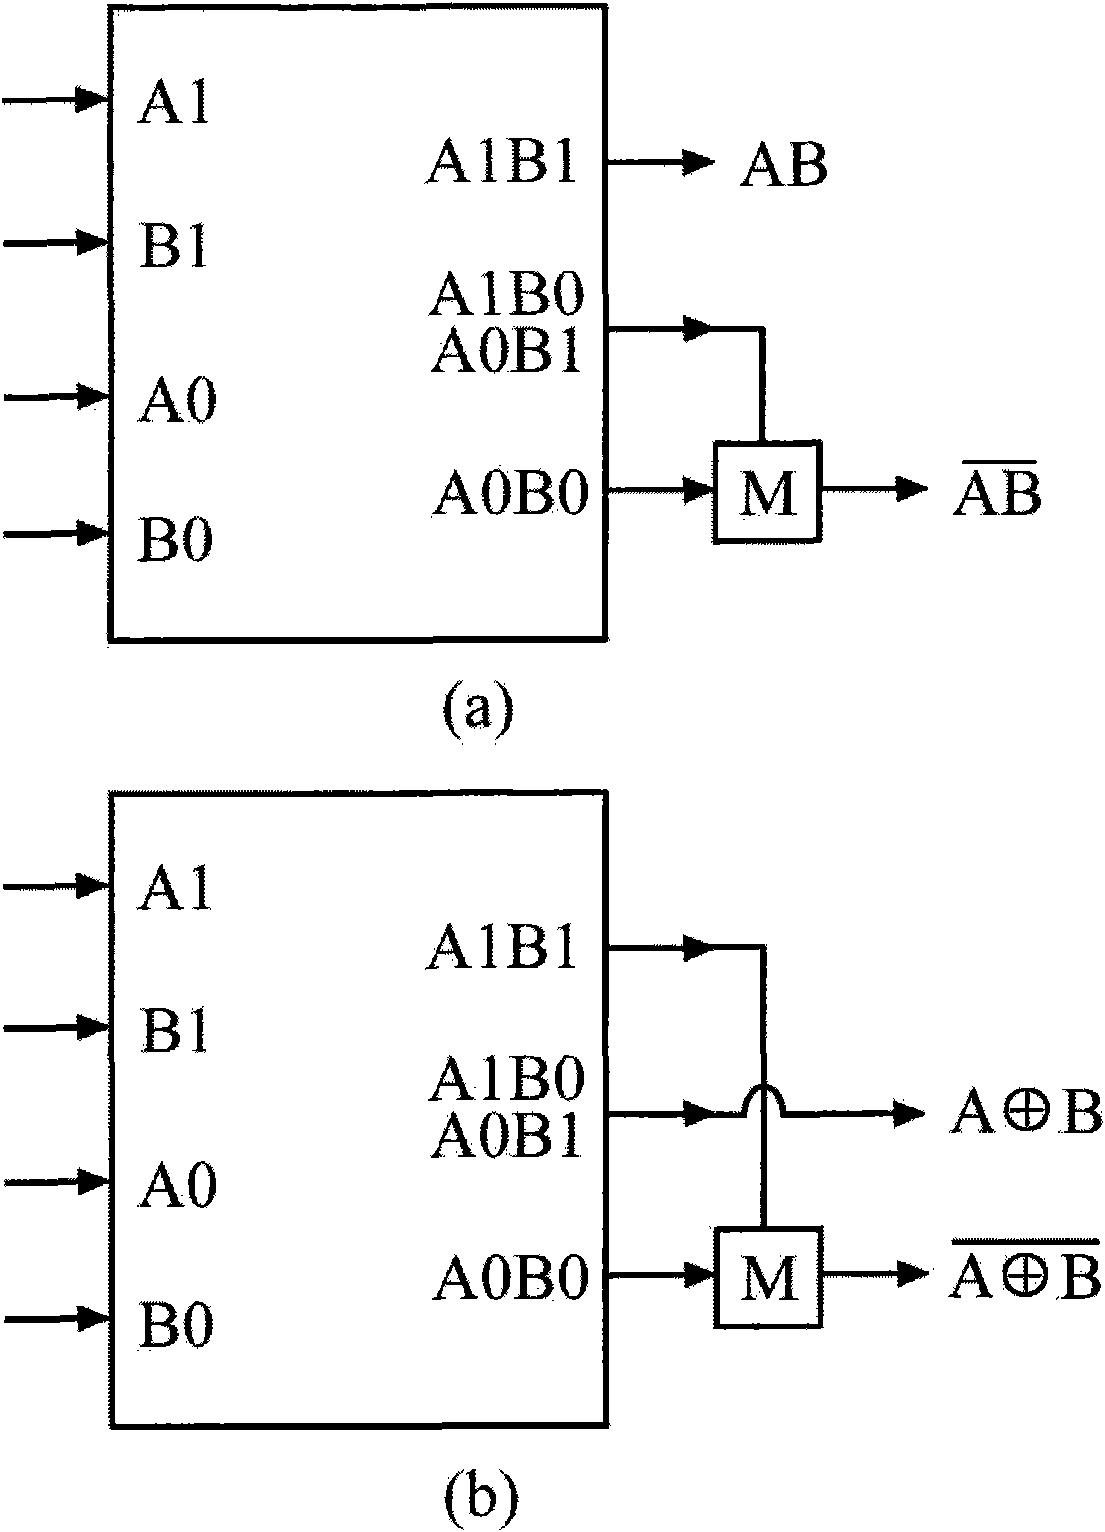 Resistive superconductive asynchronous bilinear logic universal gate circuit